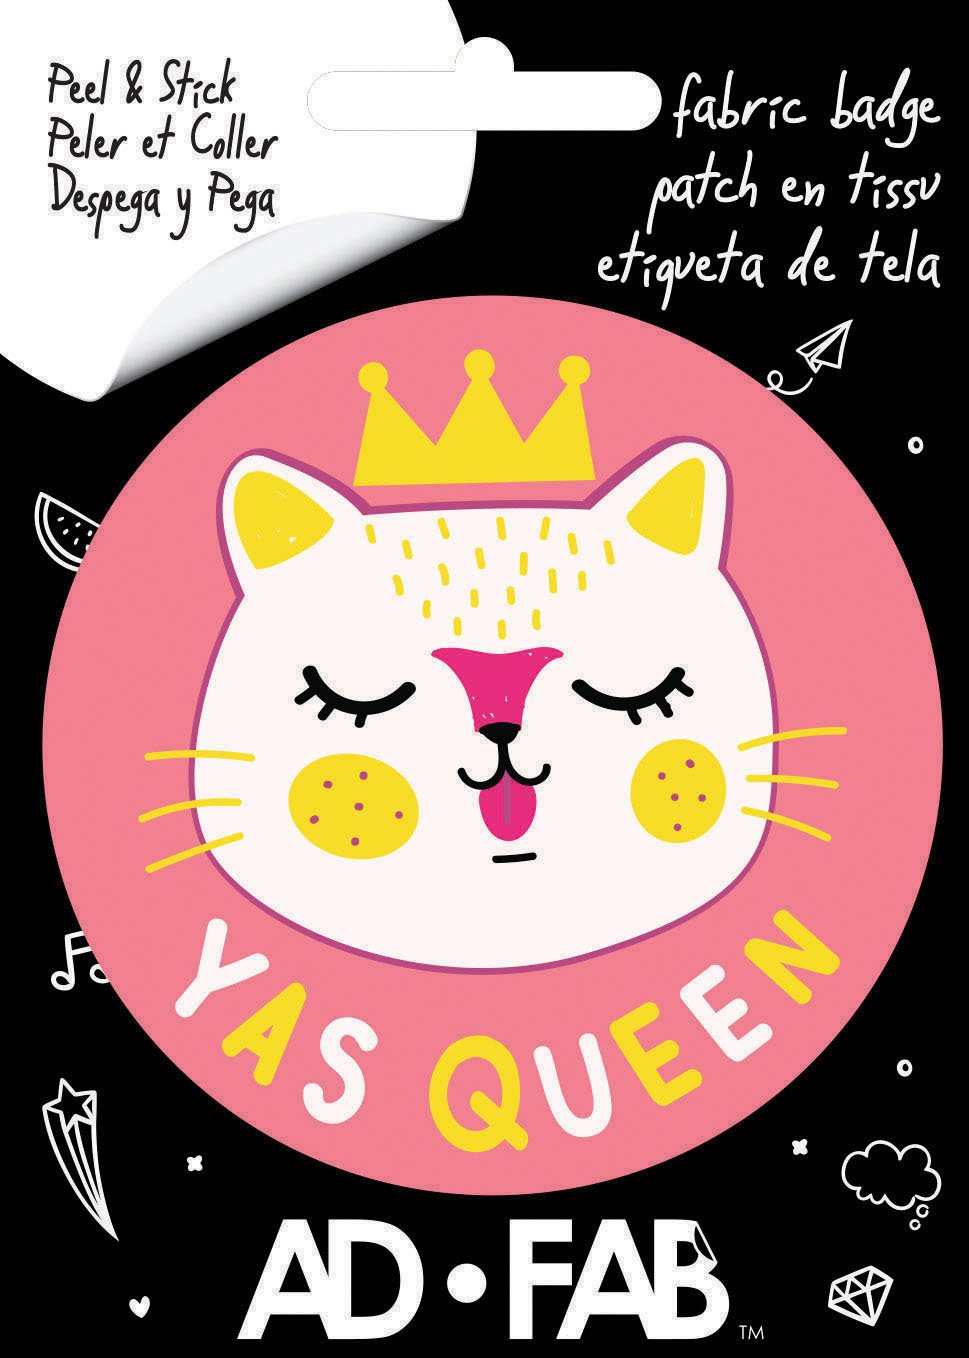 Yas Queeen Adhesive Fabric Badge